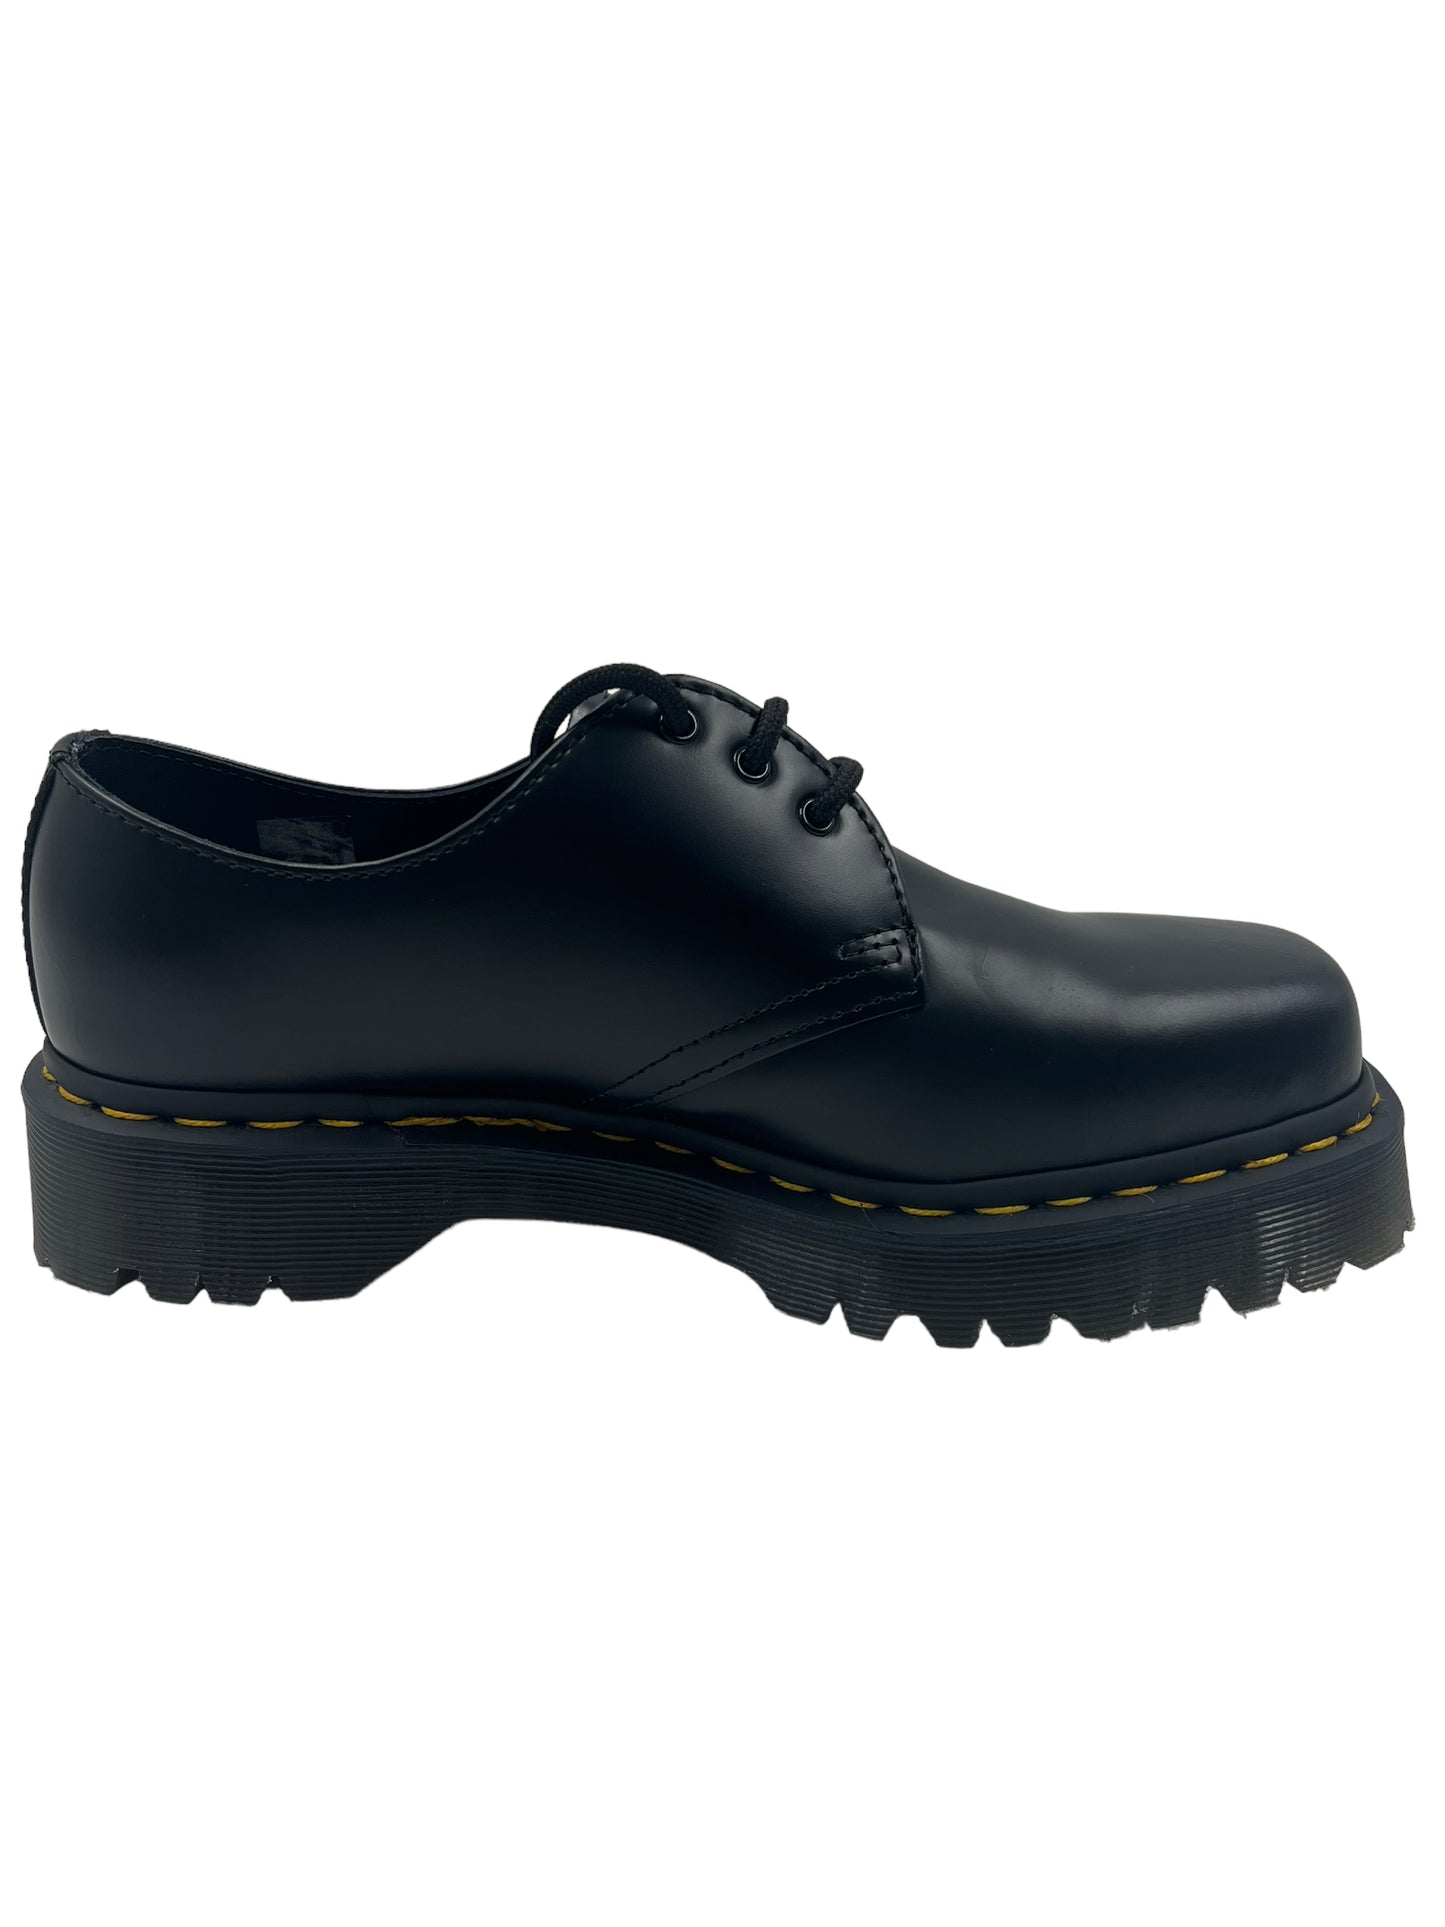 Dr. Martens Men's Size 7/Women's Size 8 1461 Bex Squared Oxford Shoes